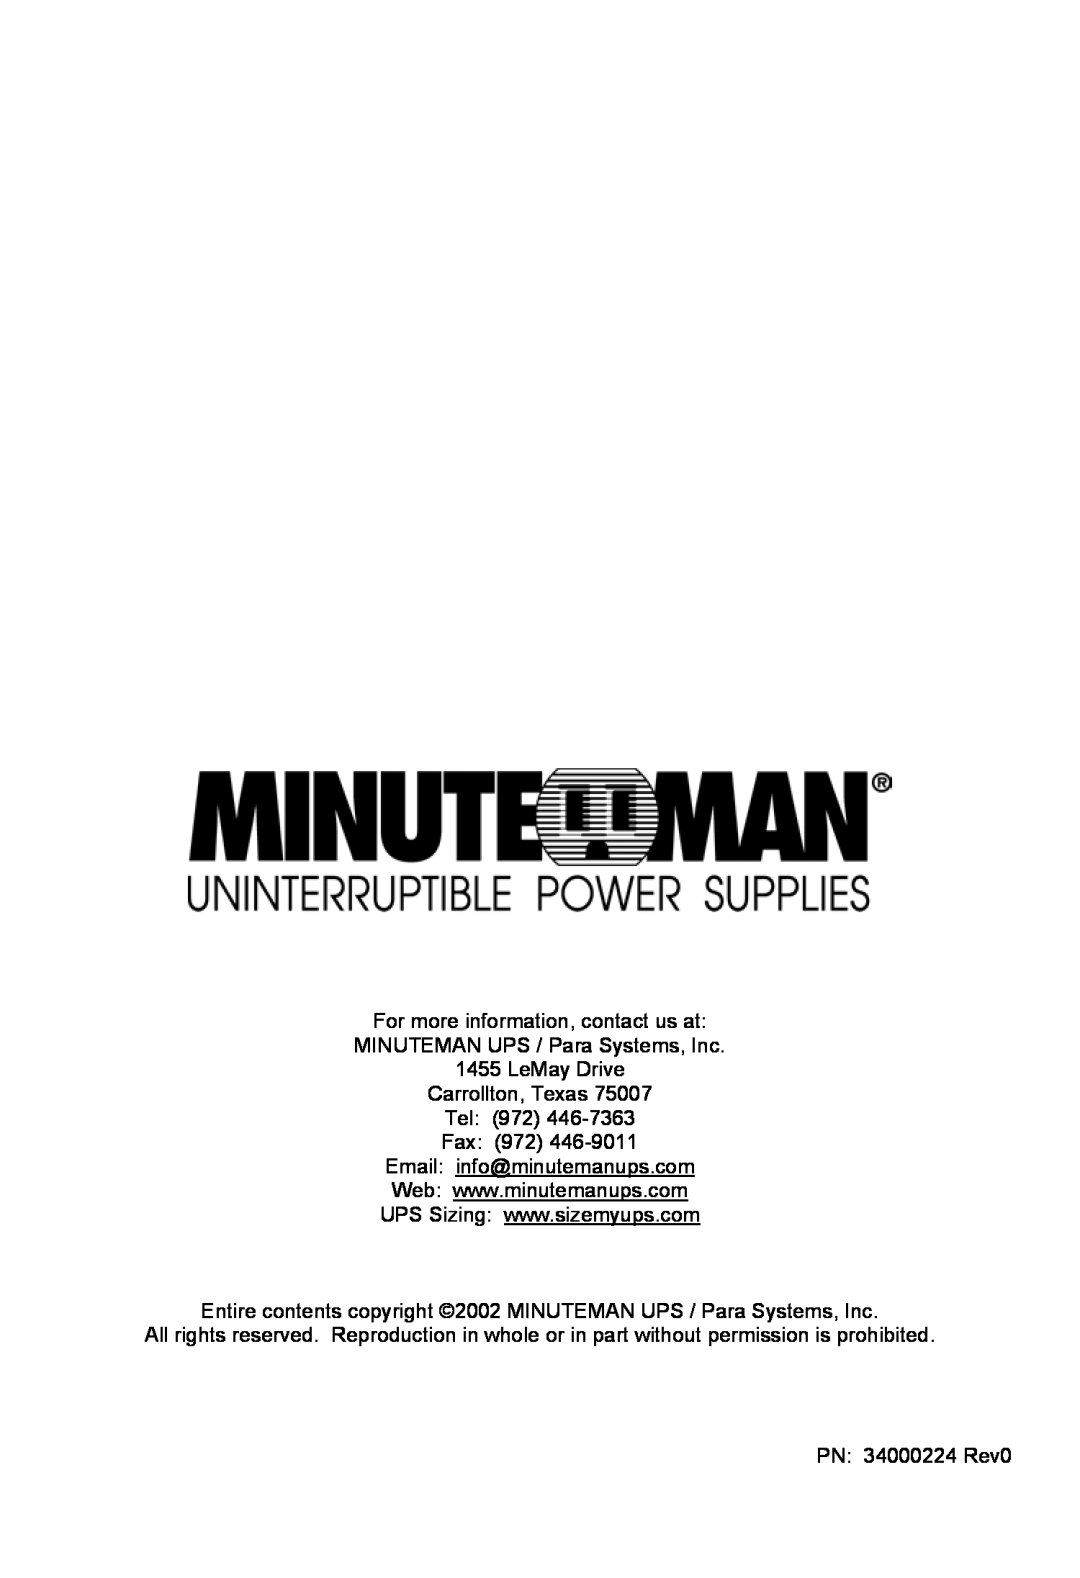 Minuteman UPS MN 325 For more information, contact us at MINUTEMAN UPS / Para Systems, Inc, Email info@minutemanups.com 